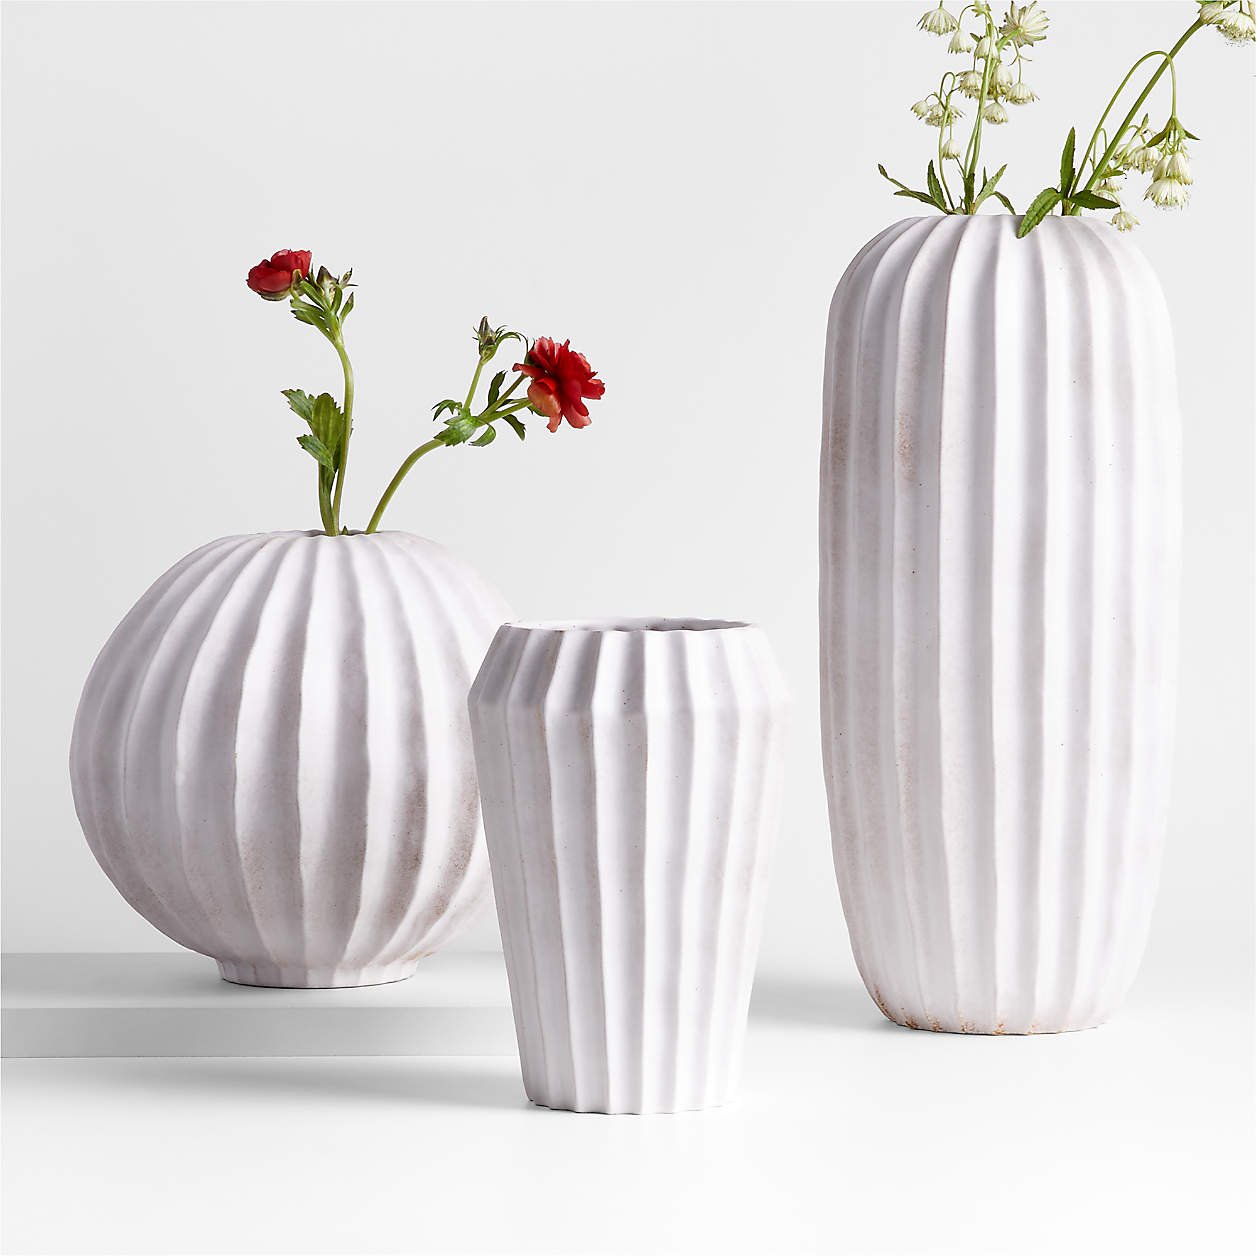 warren-white-stoneware-vases.jpg